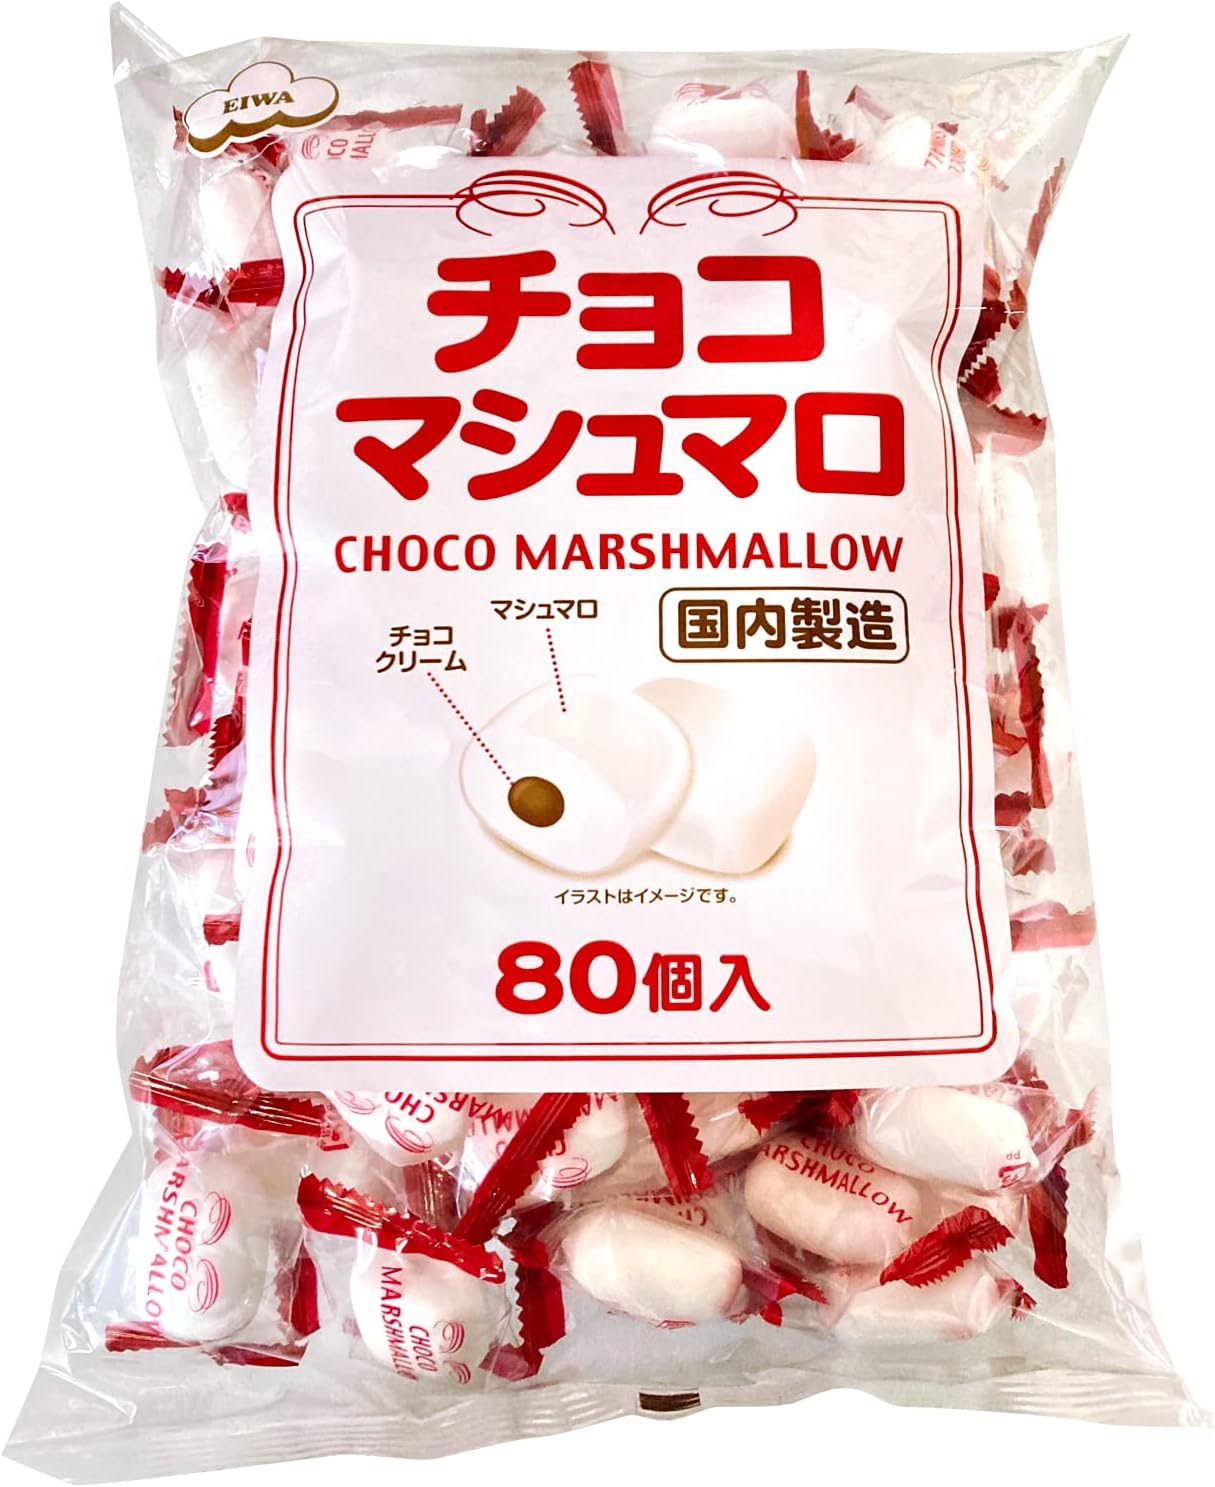  chocolate marshmallow virtue for size 80 piece eiwa free shipping 